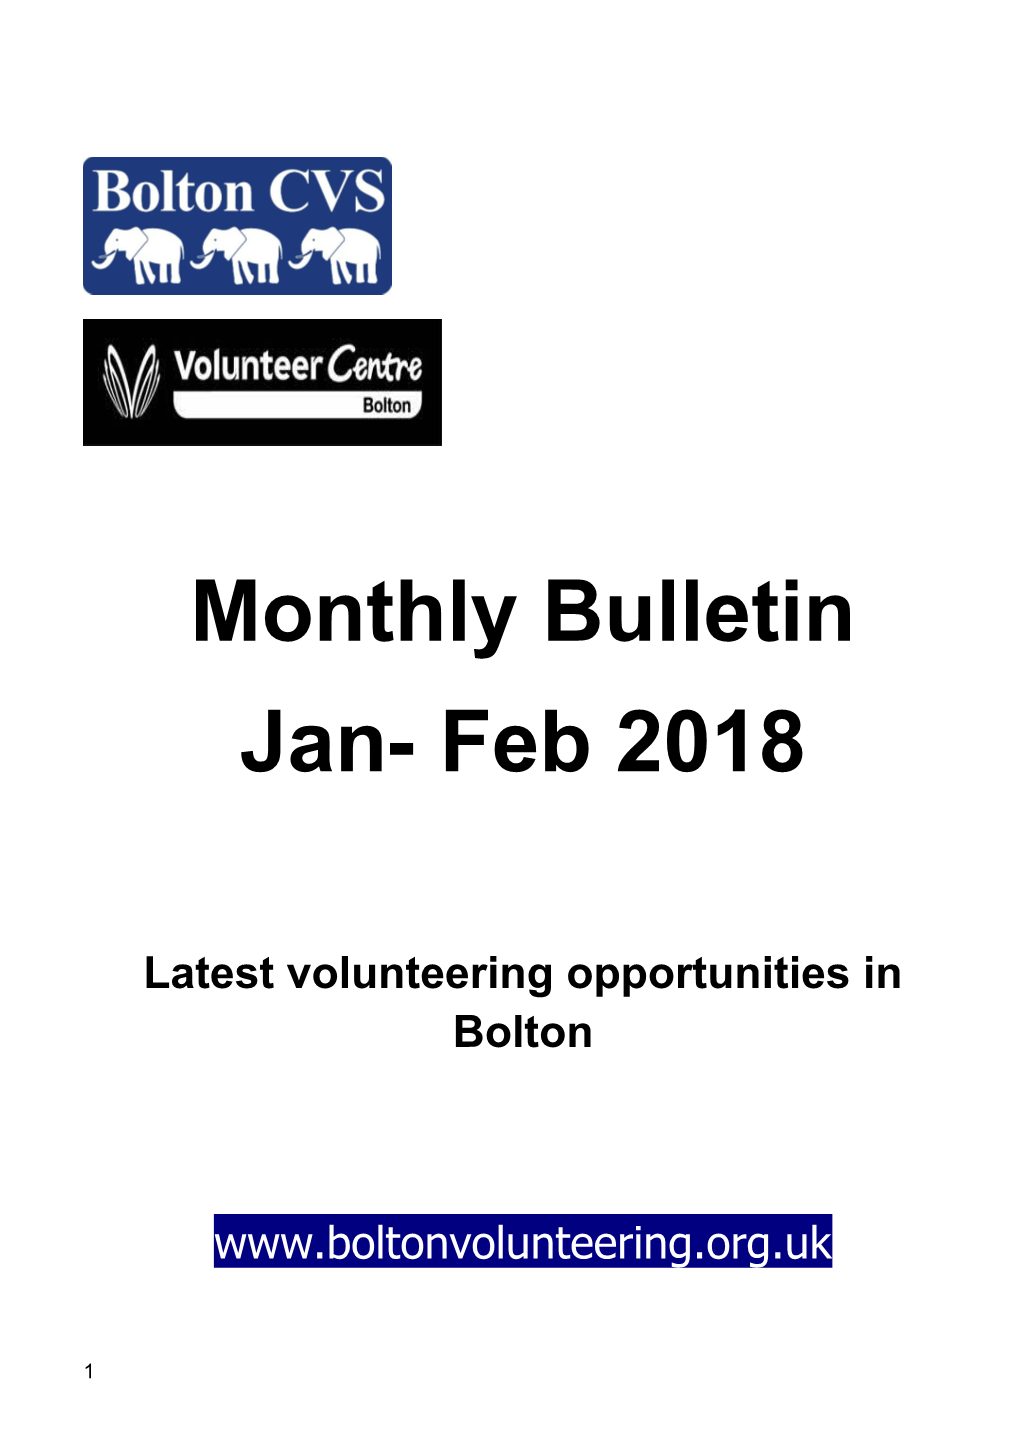 Latest Volunteering Opportunities in Bolton